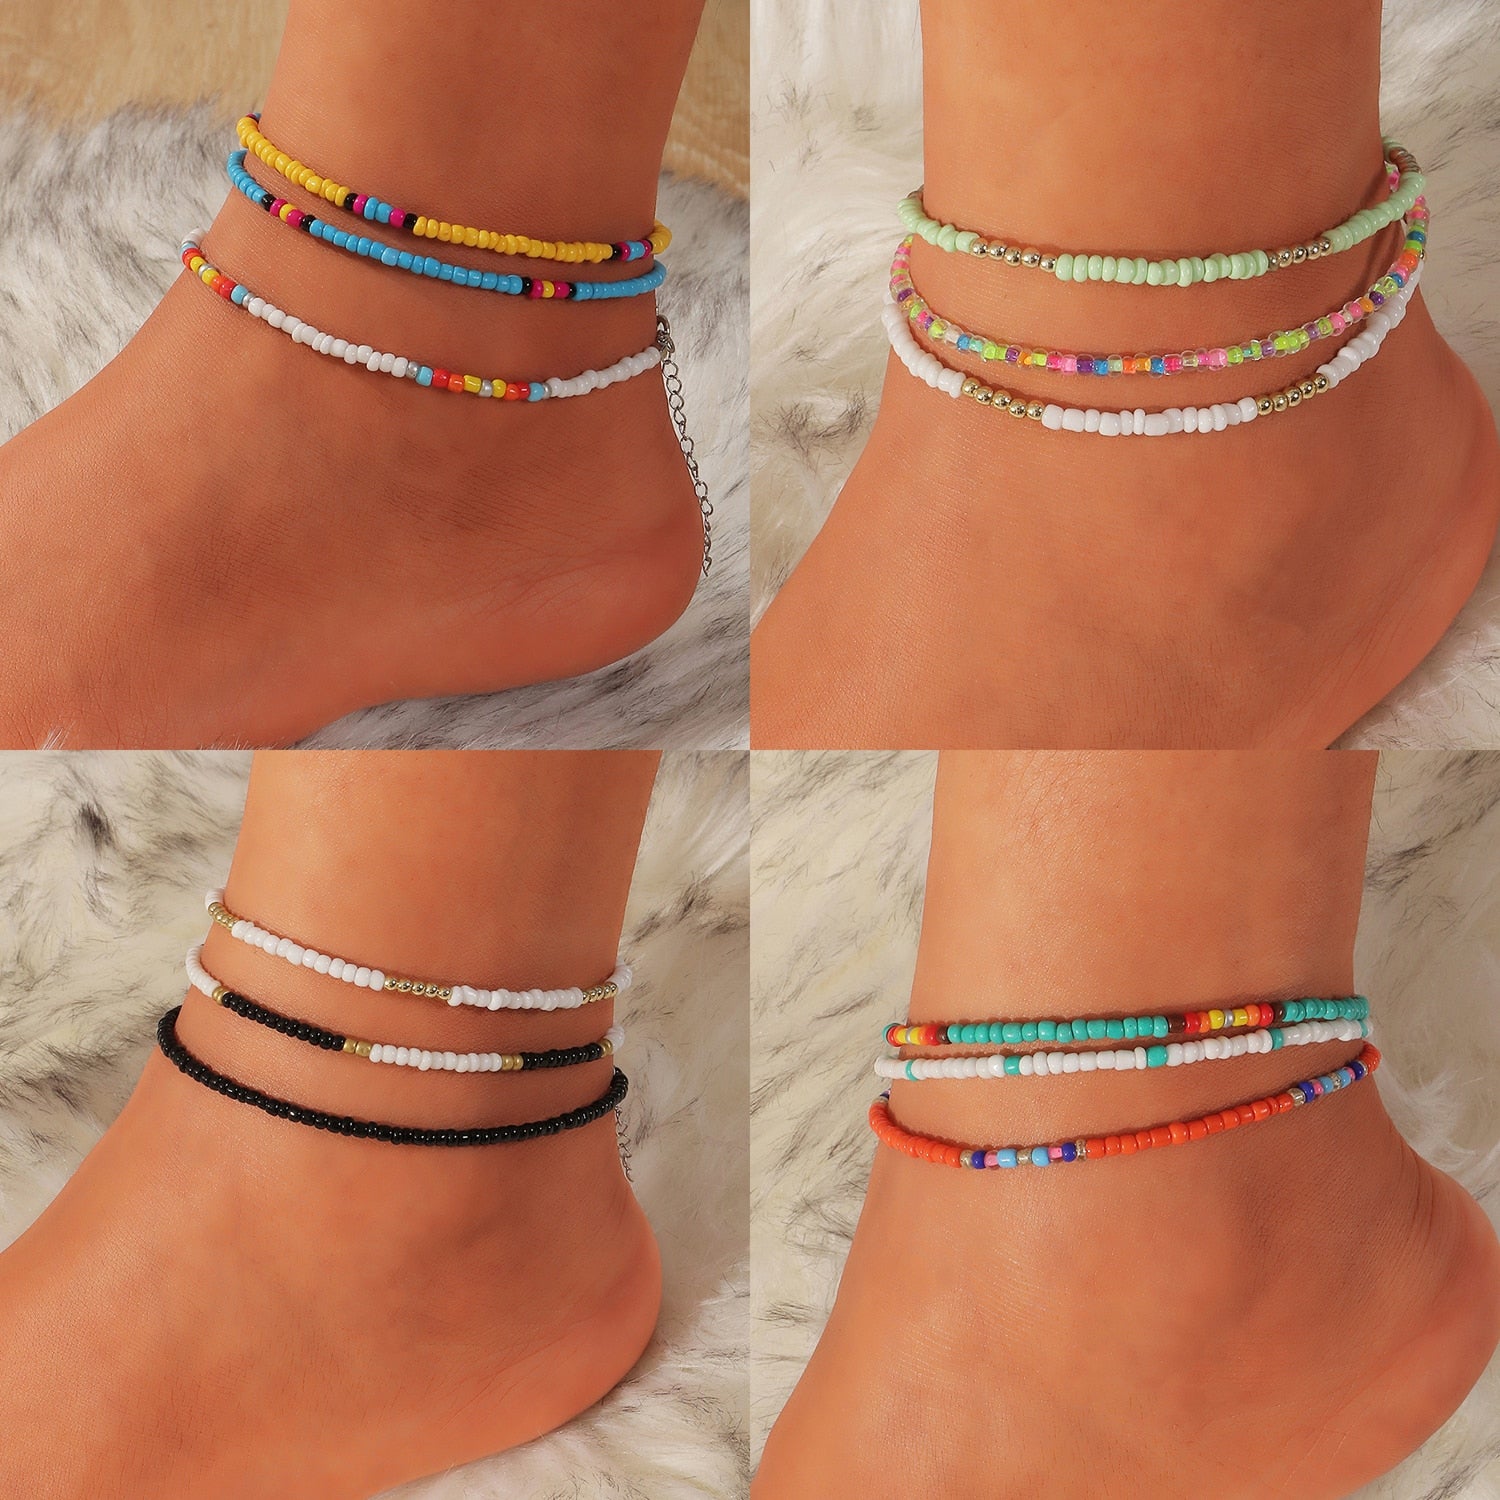 3pcs/set Bohemian Colorful Beaded Beads Anklets For Women Summer Ocean Beach Handmade Ankle Bracelet Foot Leg Beach Jewelry Gift